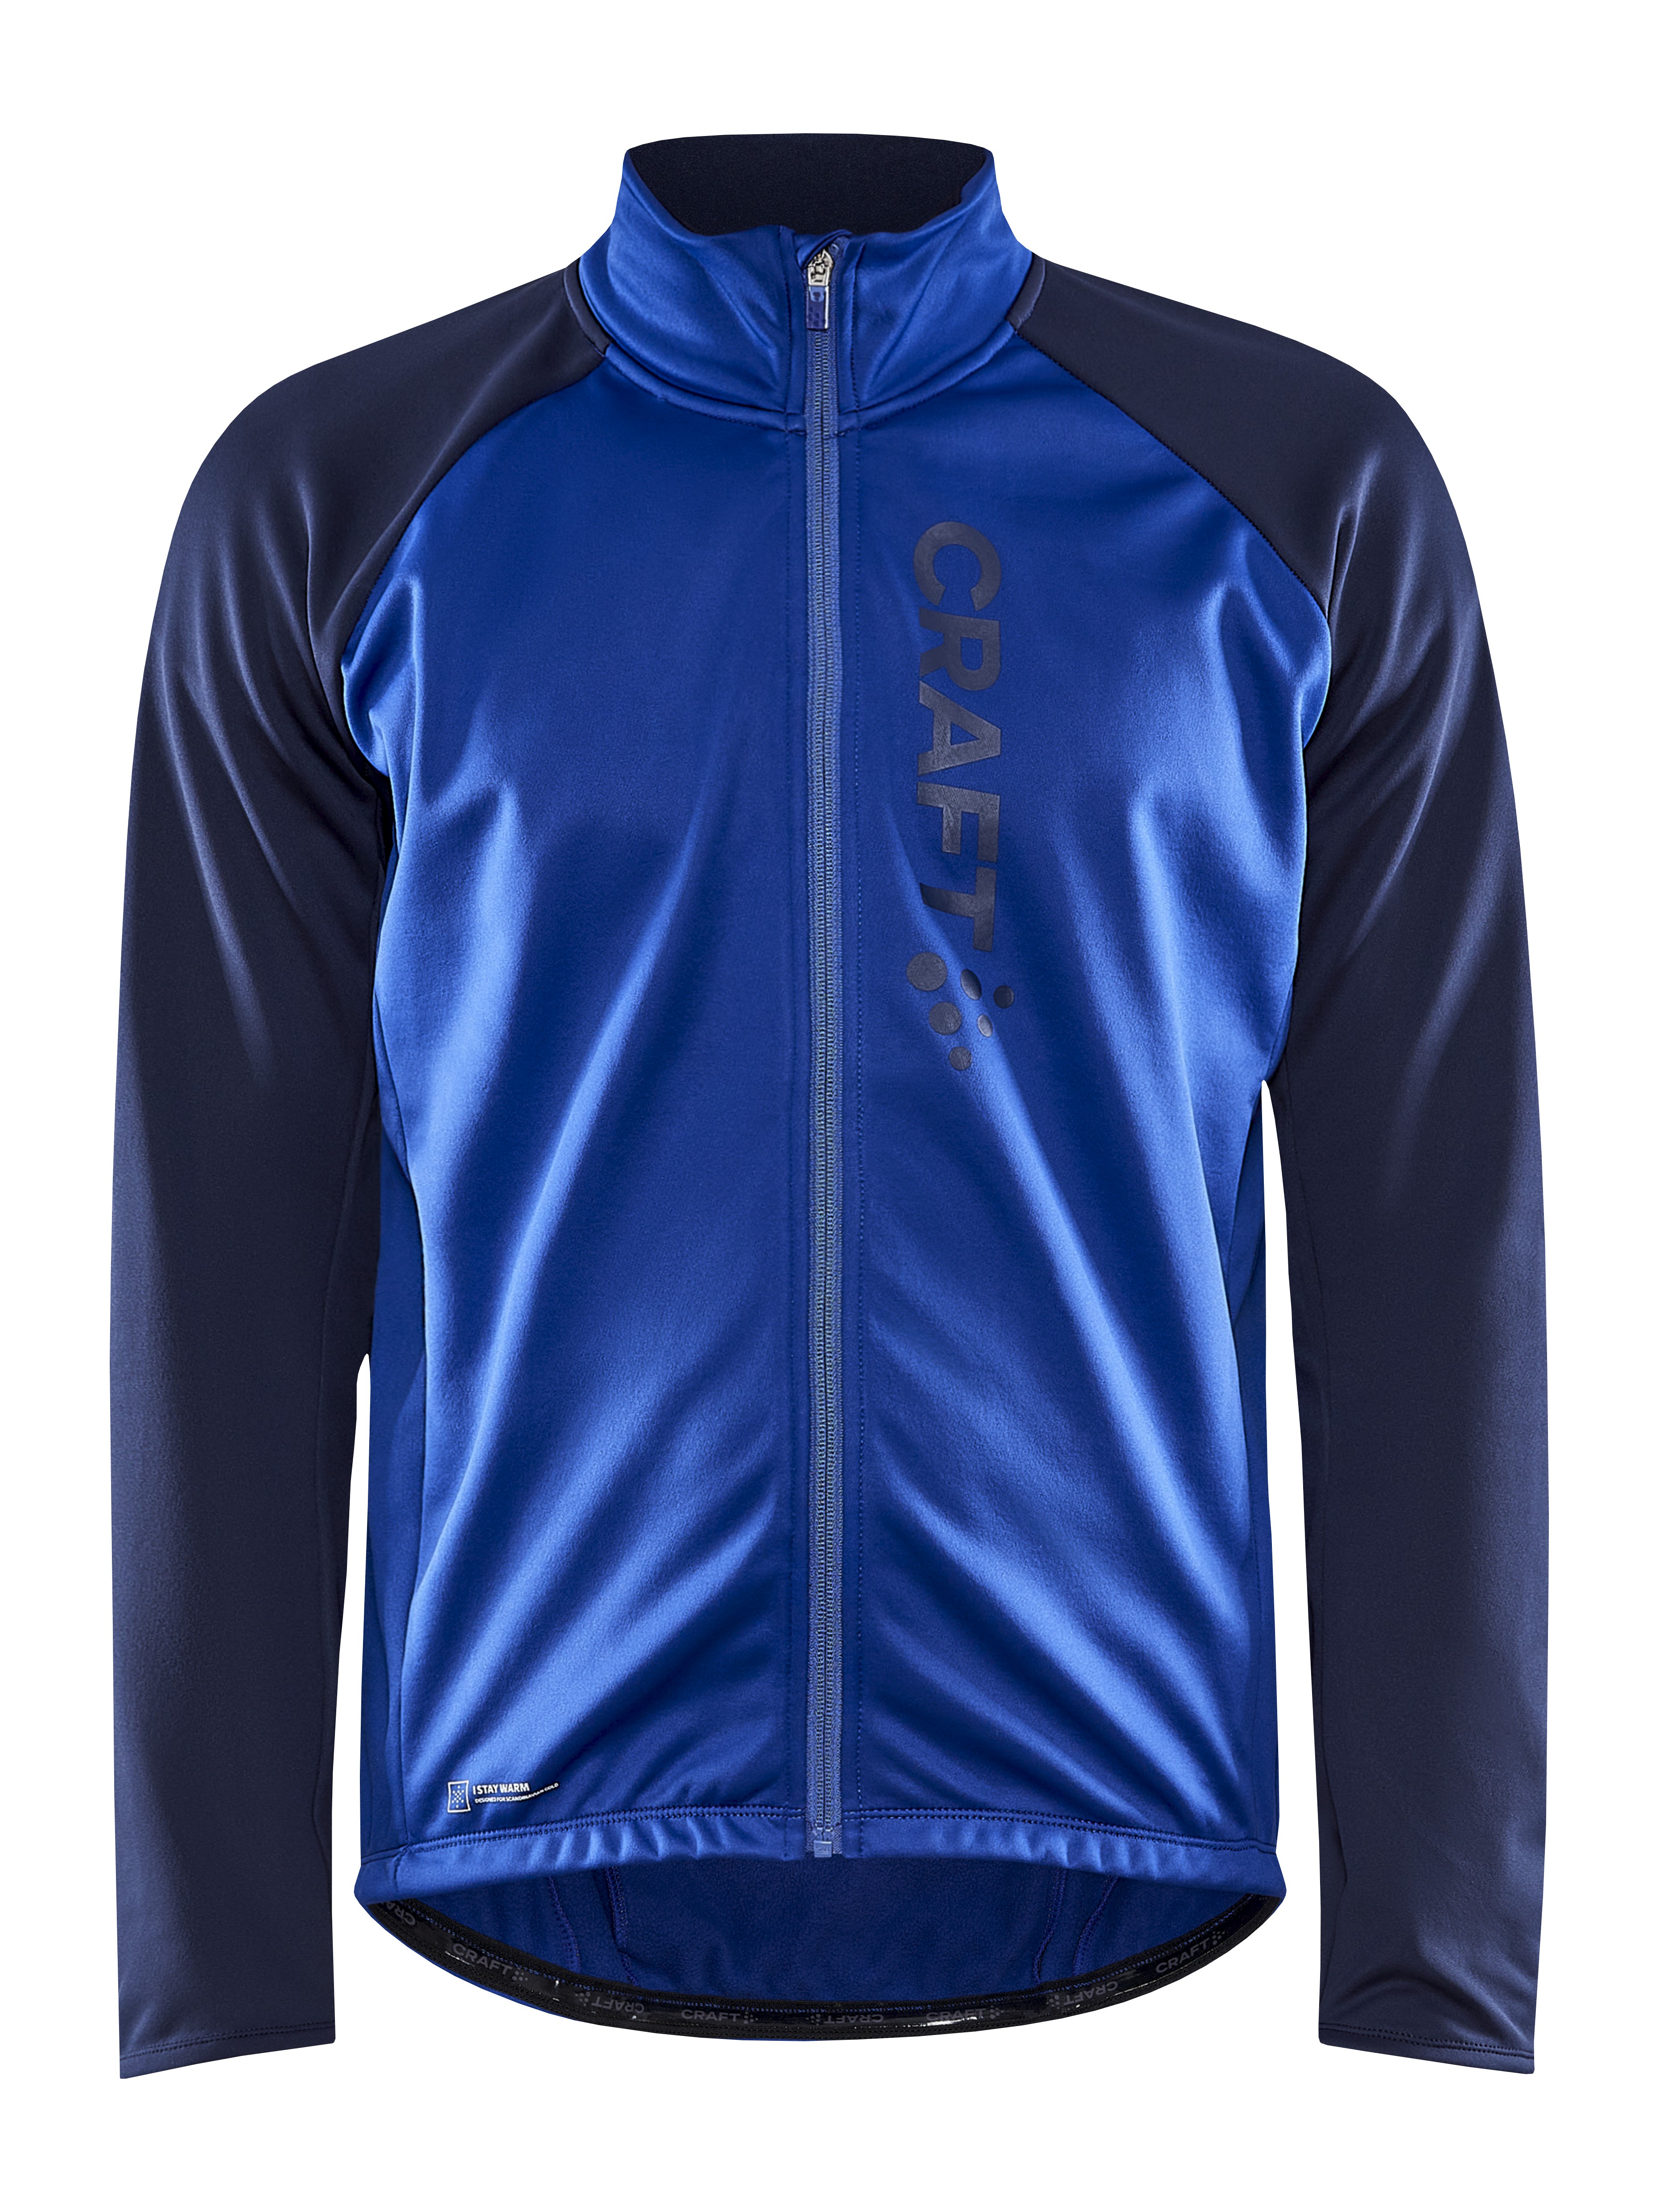 Core Bike SubZ Jacket M - Navy blue | Craft Sportswear